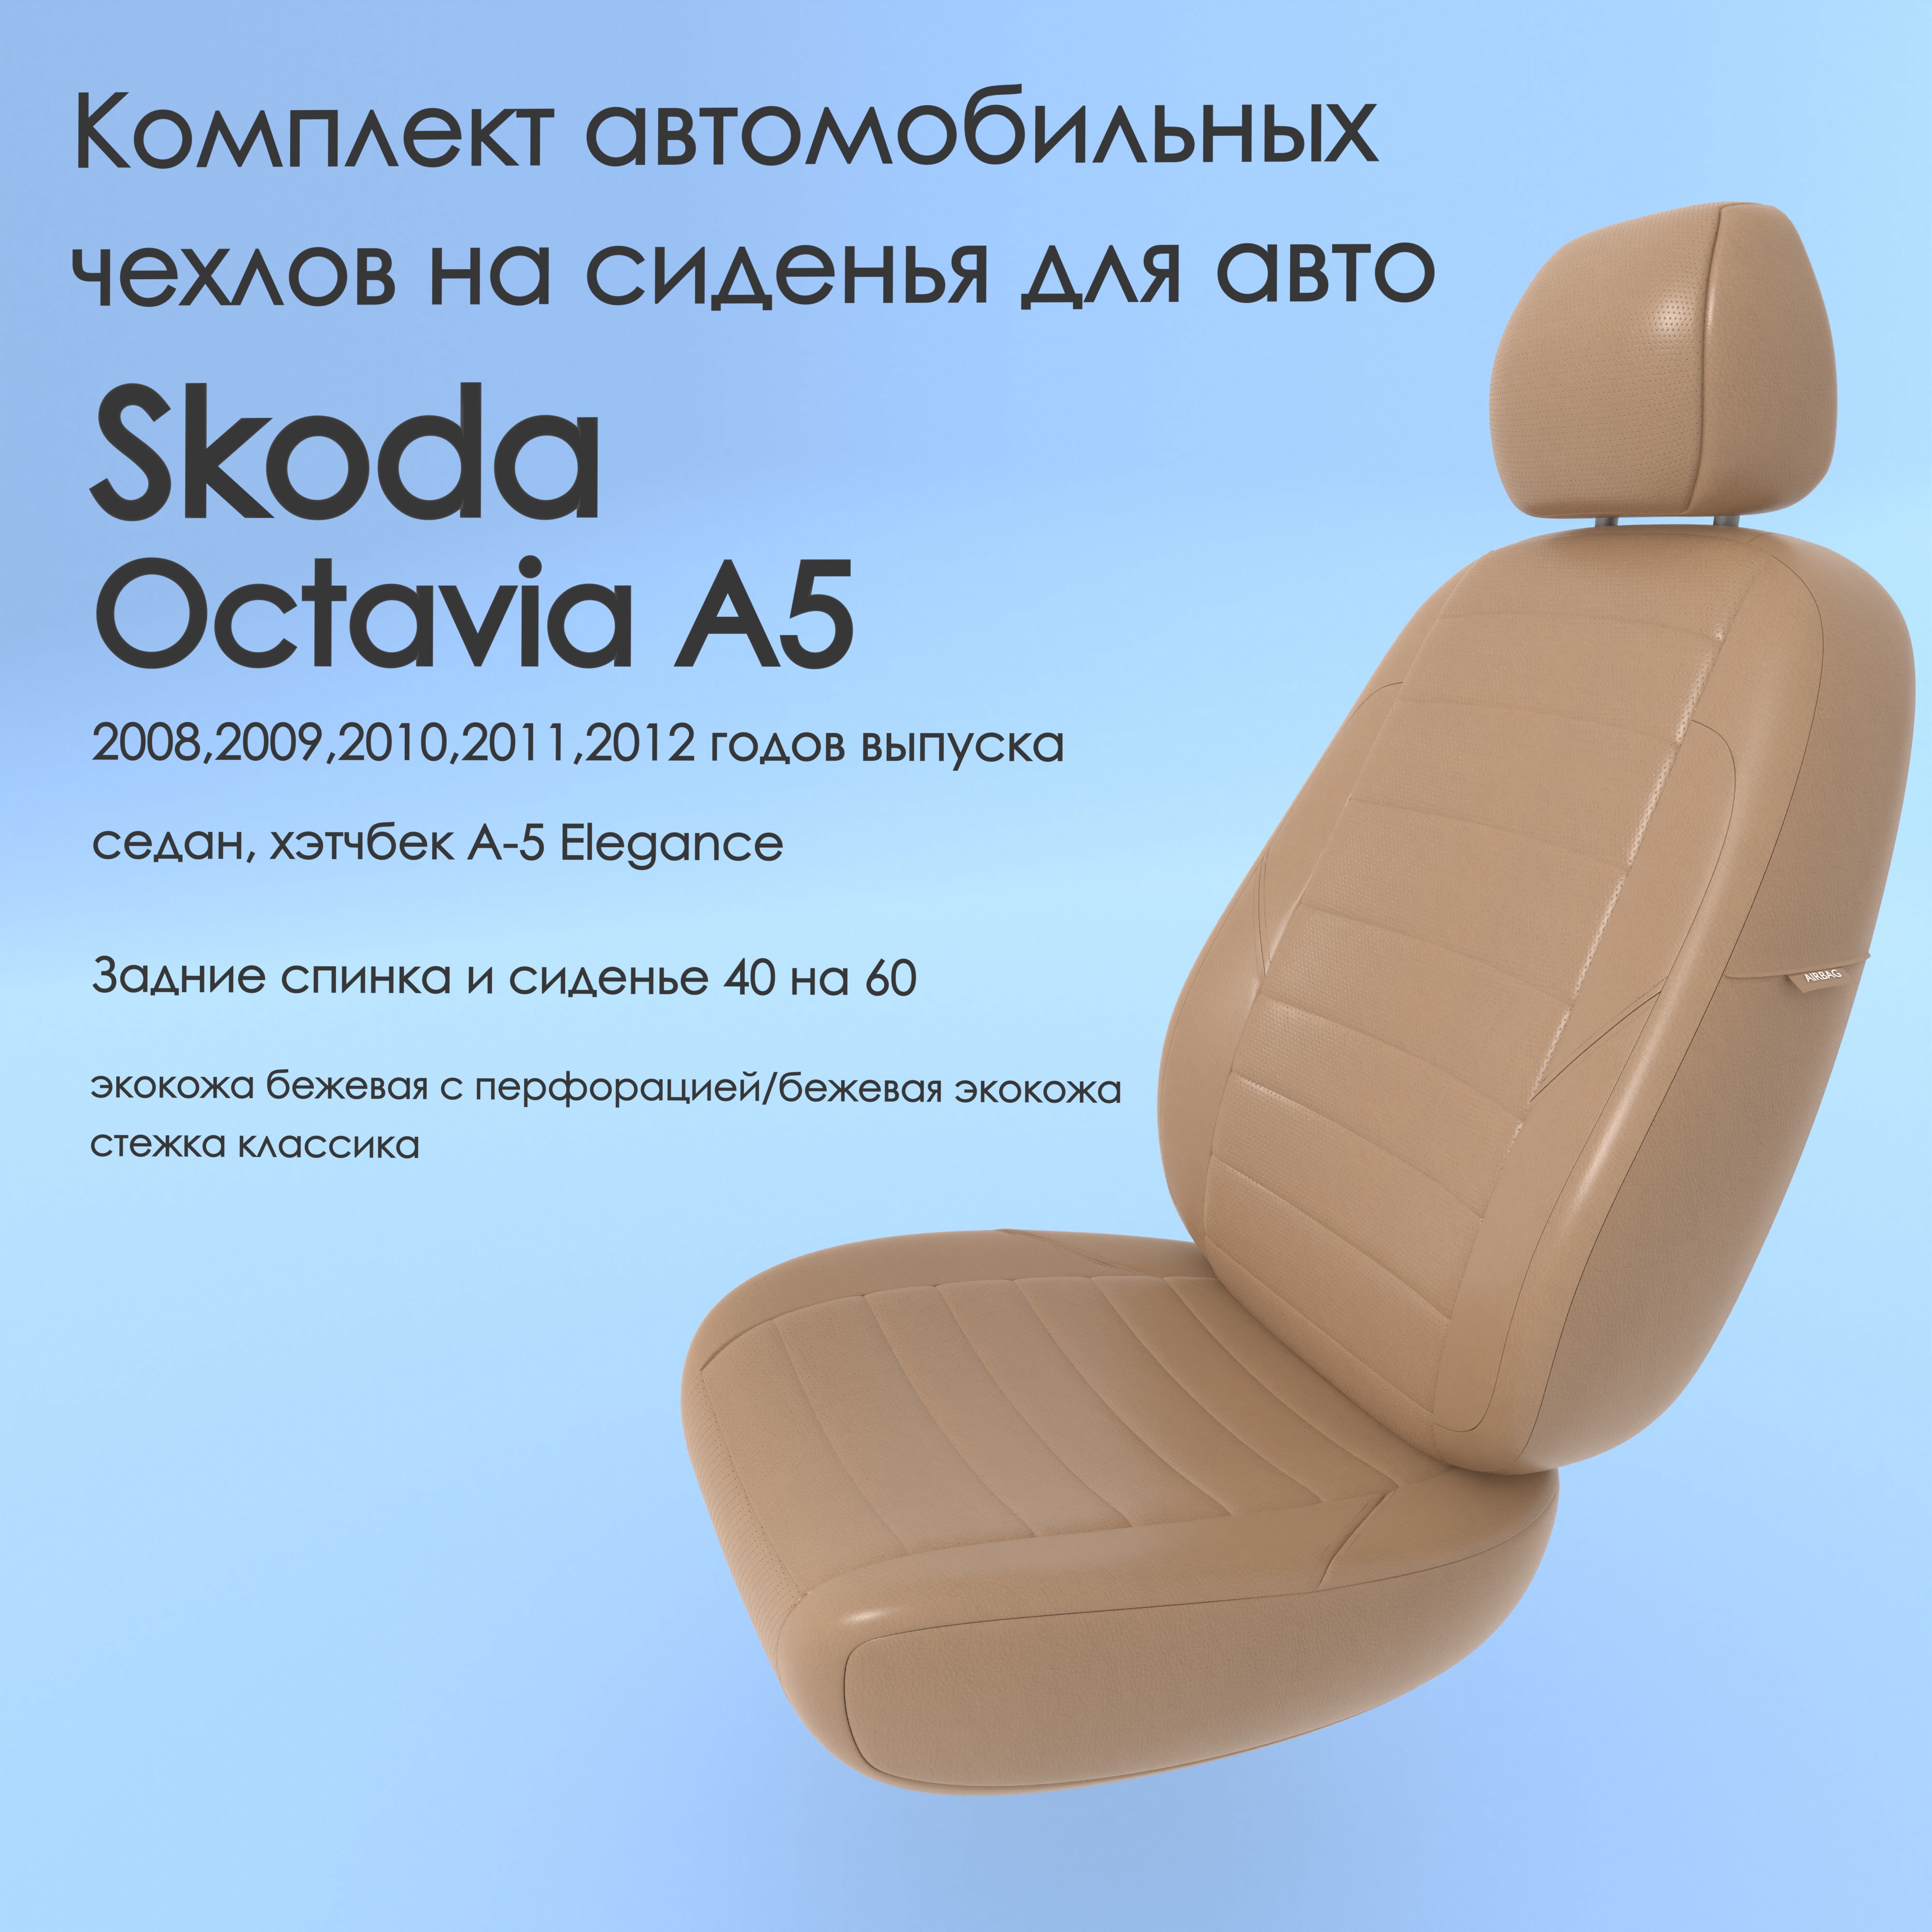 Чехлы Чехломания Skoda Octavia A5 2008-2012 седан, хэтчбек Elegance беж-эк/k1